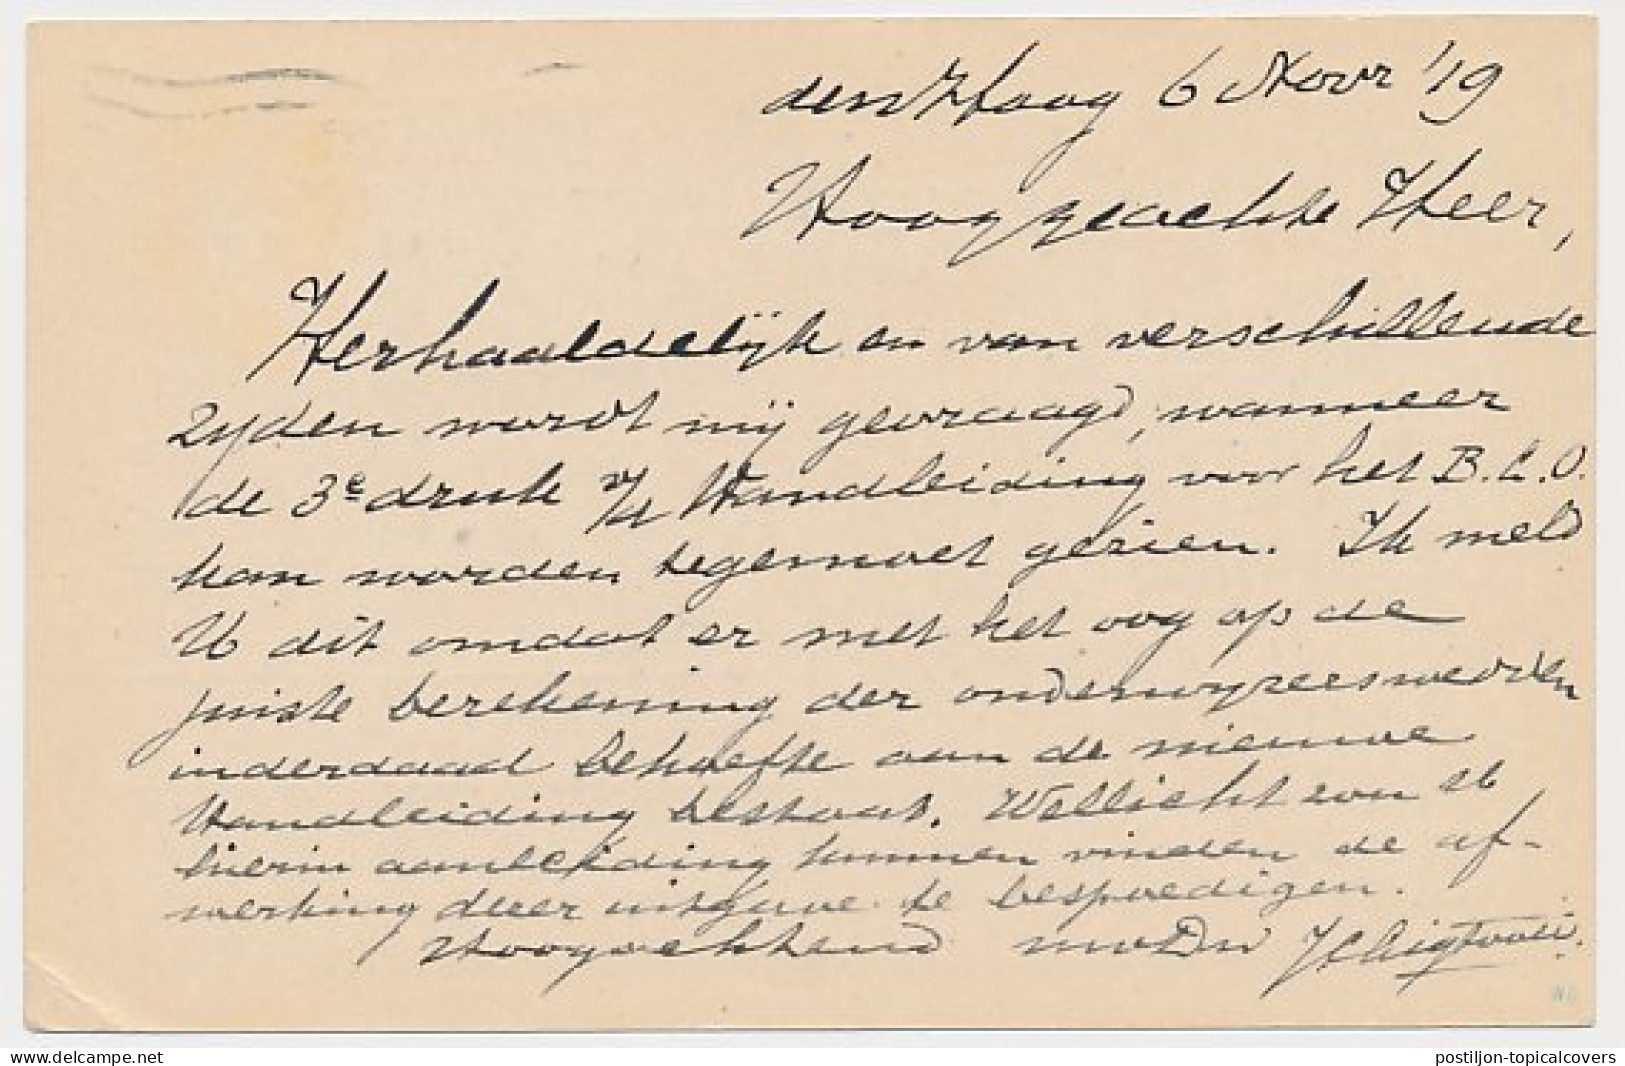 Briefkaart G. 88 A I / Bijfrankering Den Haag - Alphen 1919 - Interi Postali